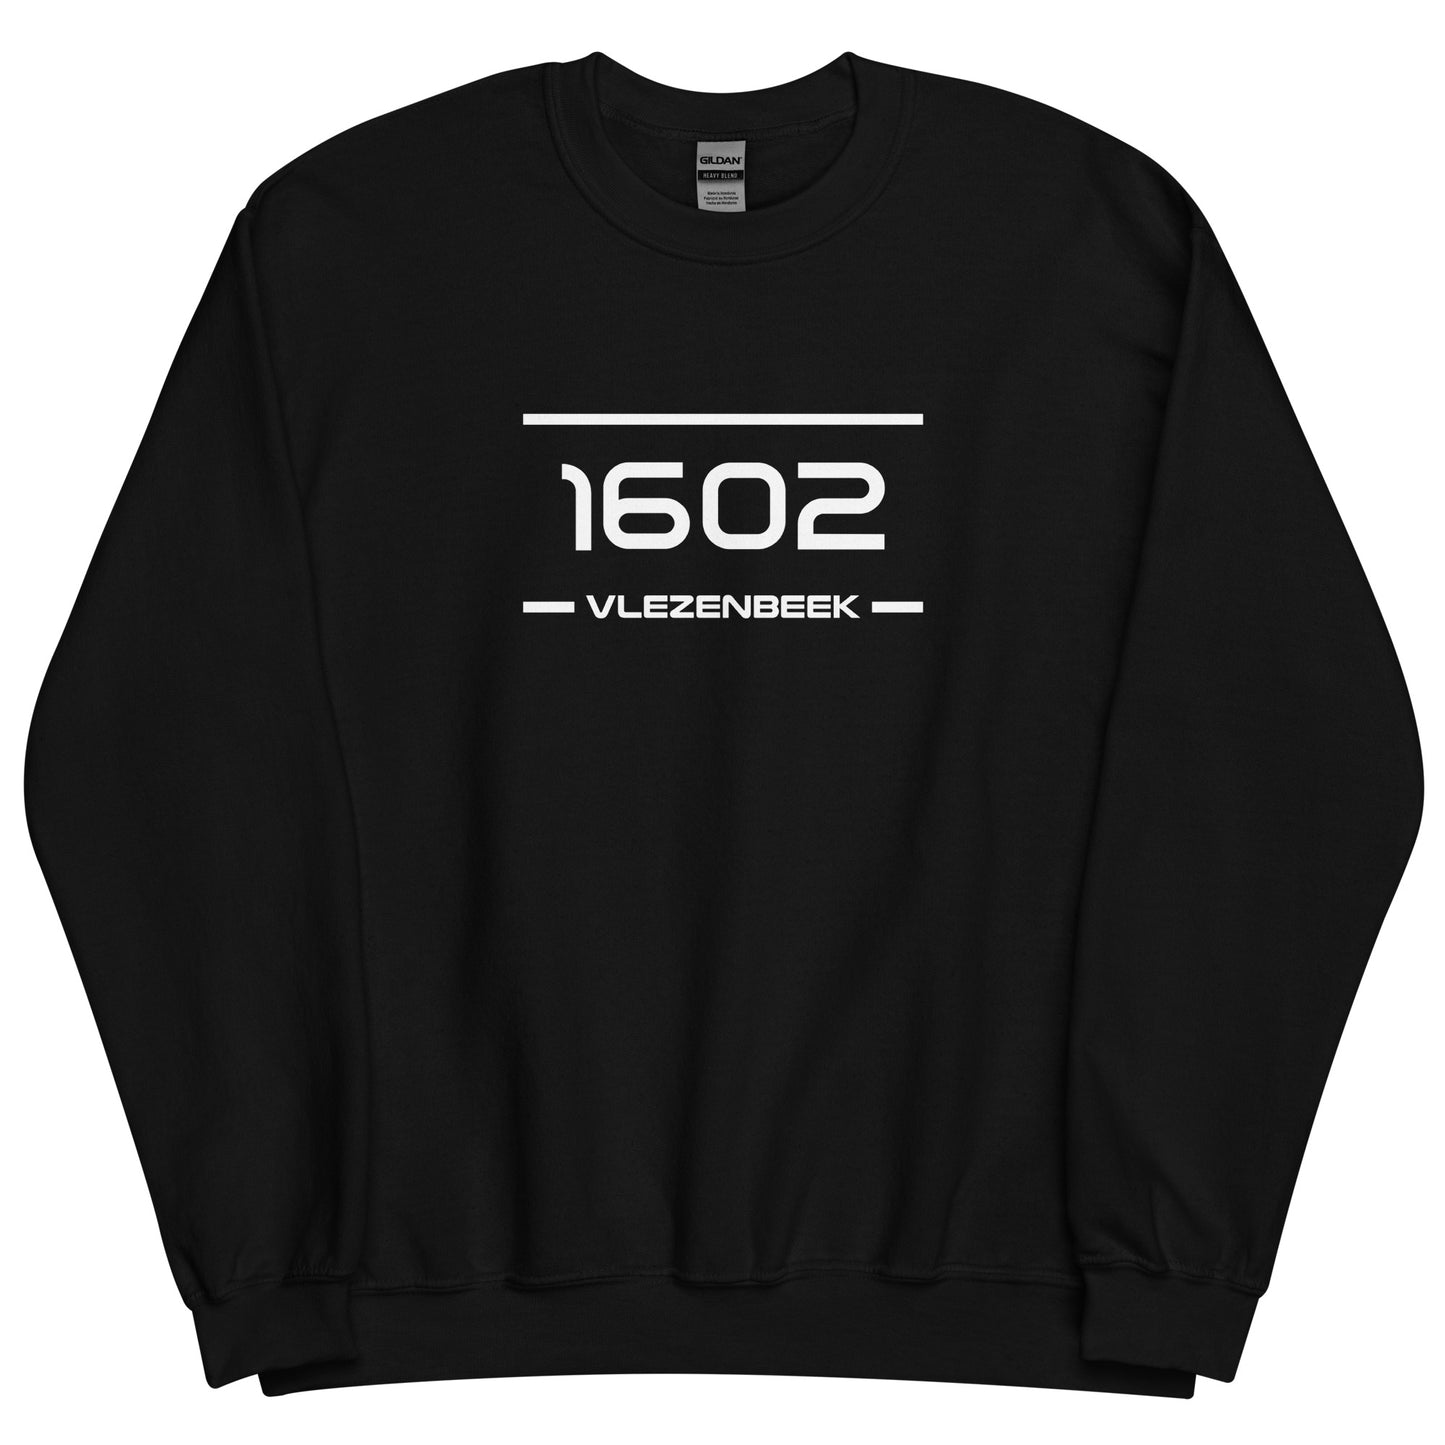 Sweater - 1602 - Vlezenbeek (M/V)